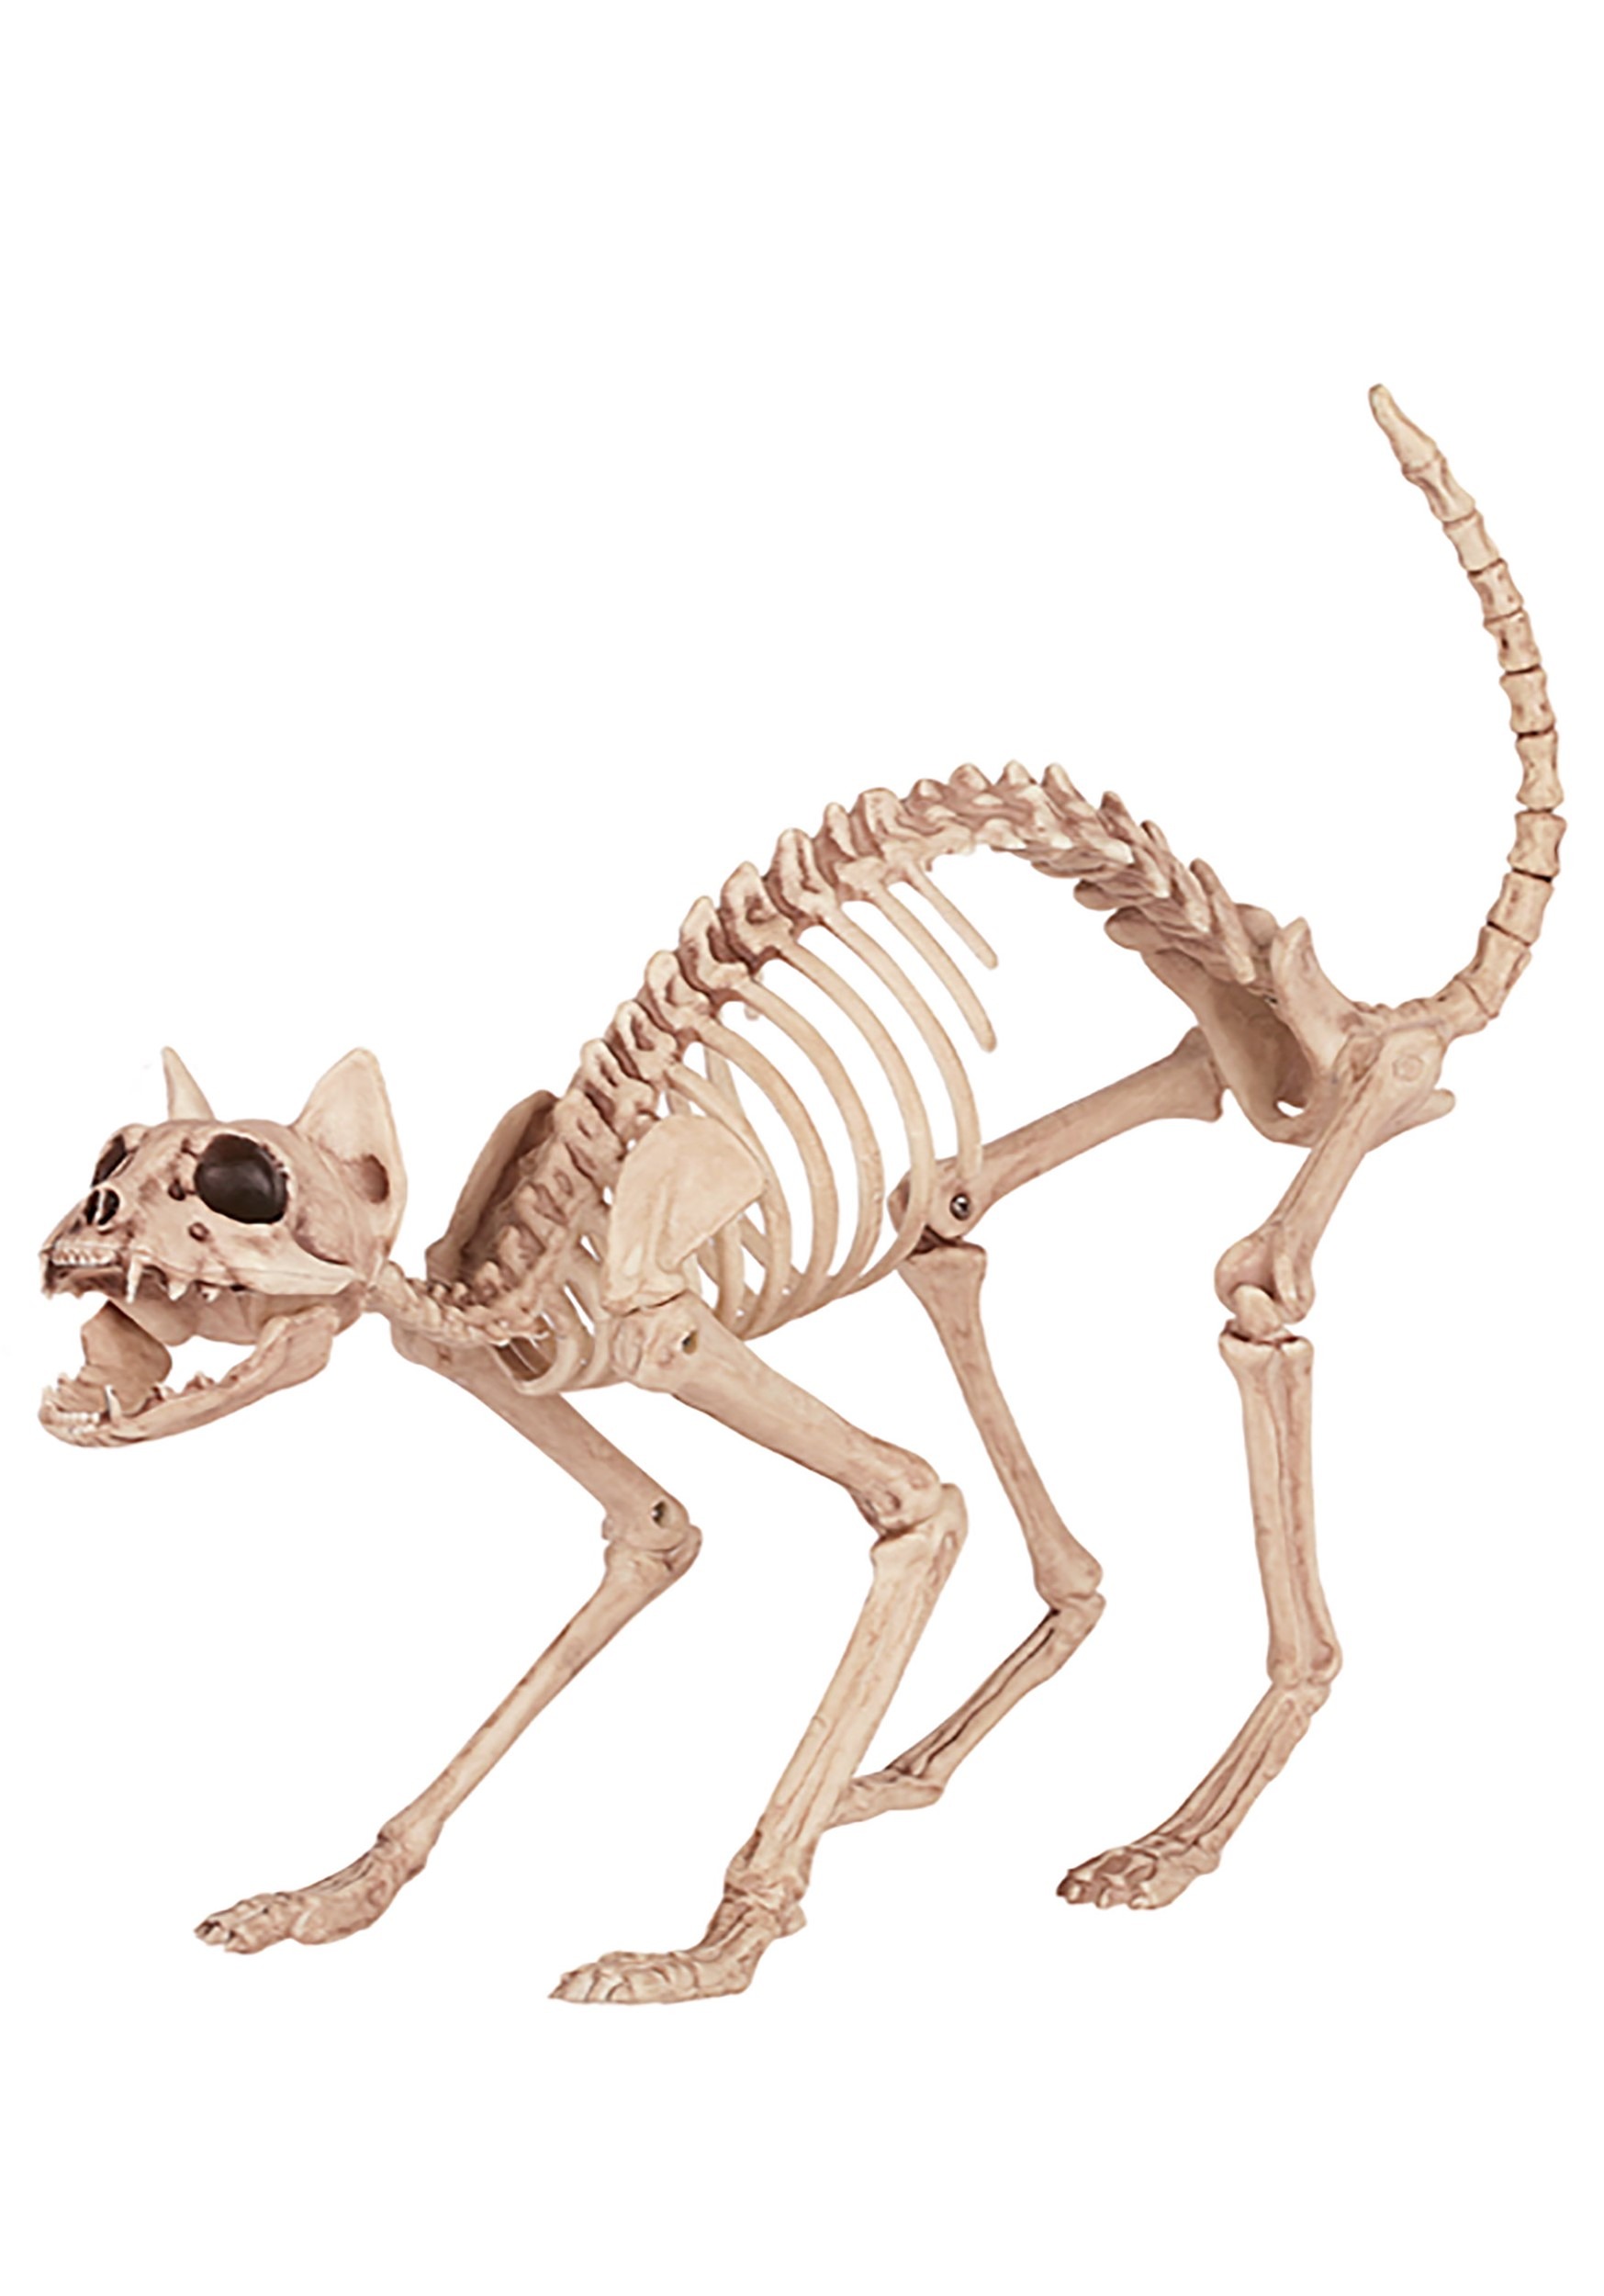 Real Domestic Cat Skeleton by Skulls Unlimited For Sale Skulls